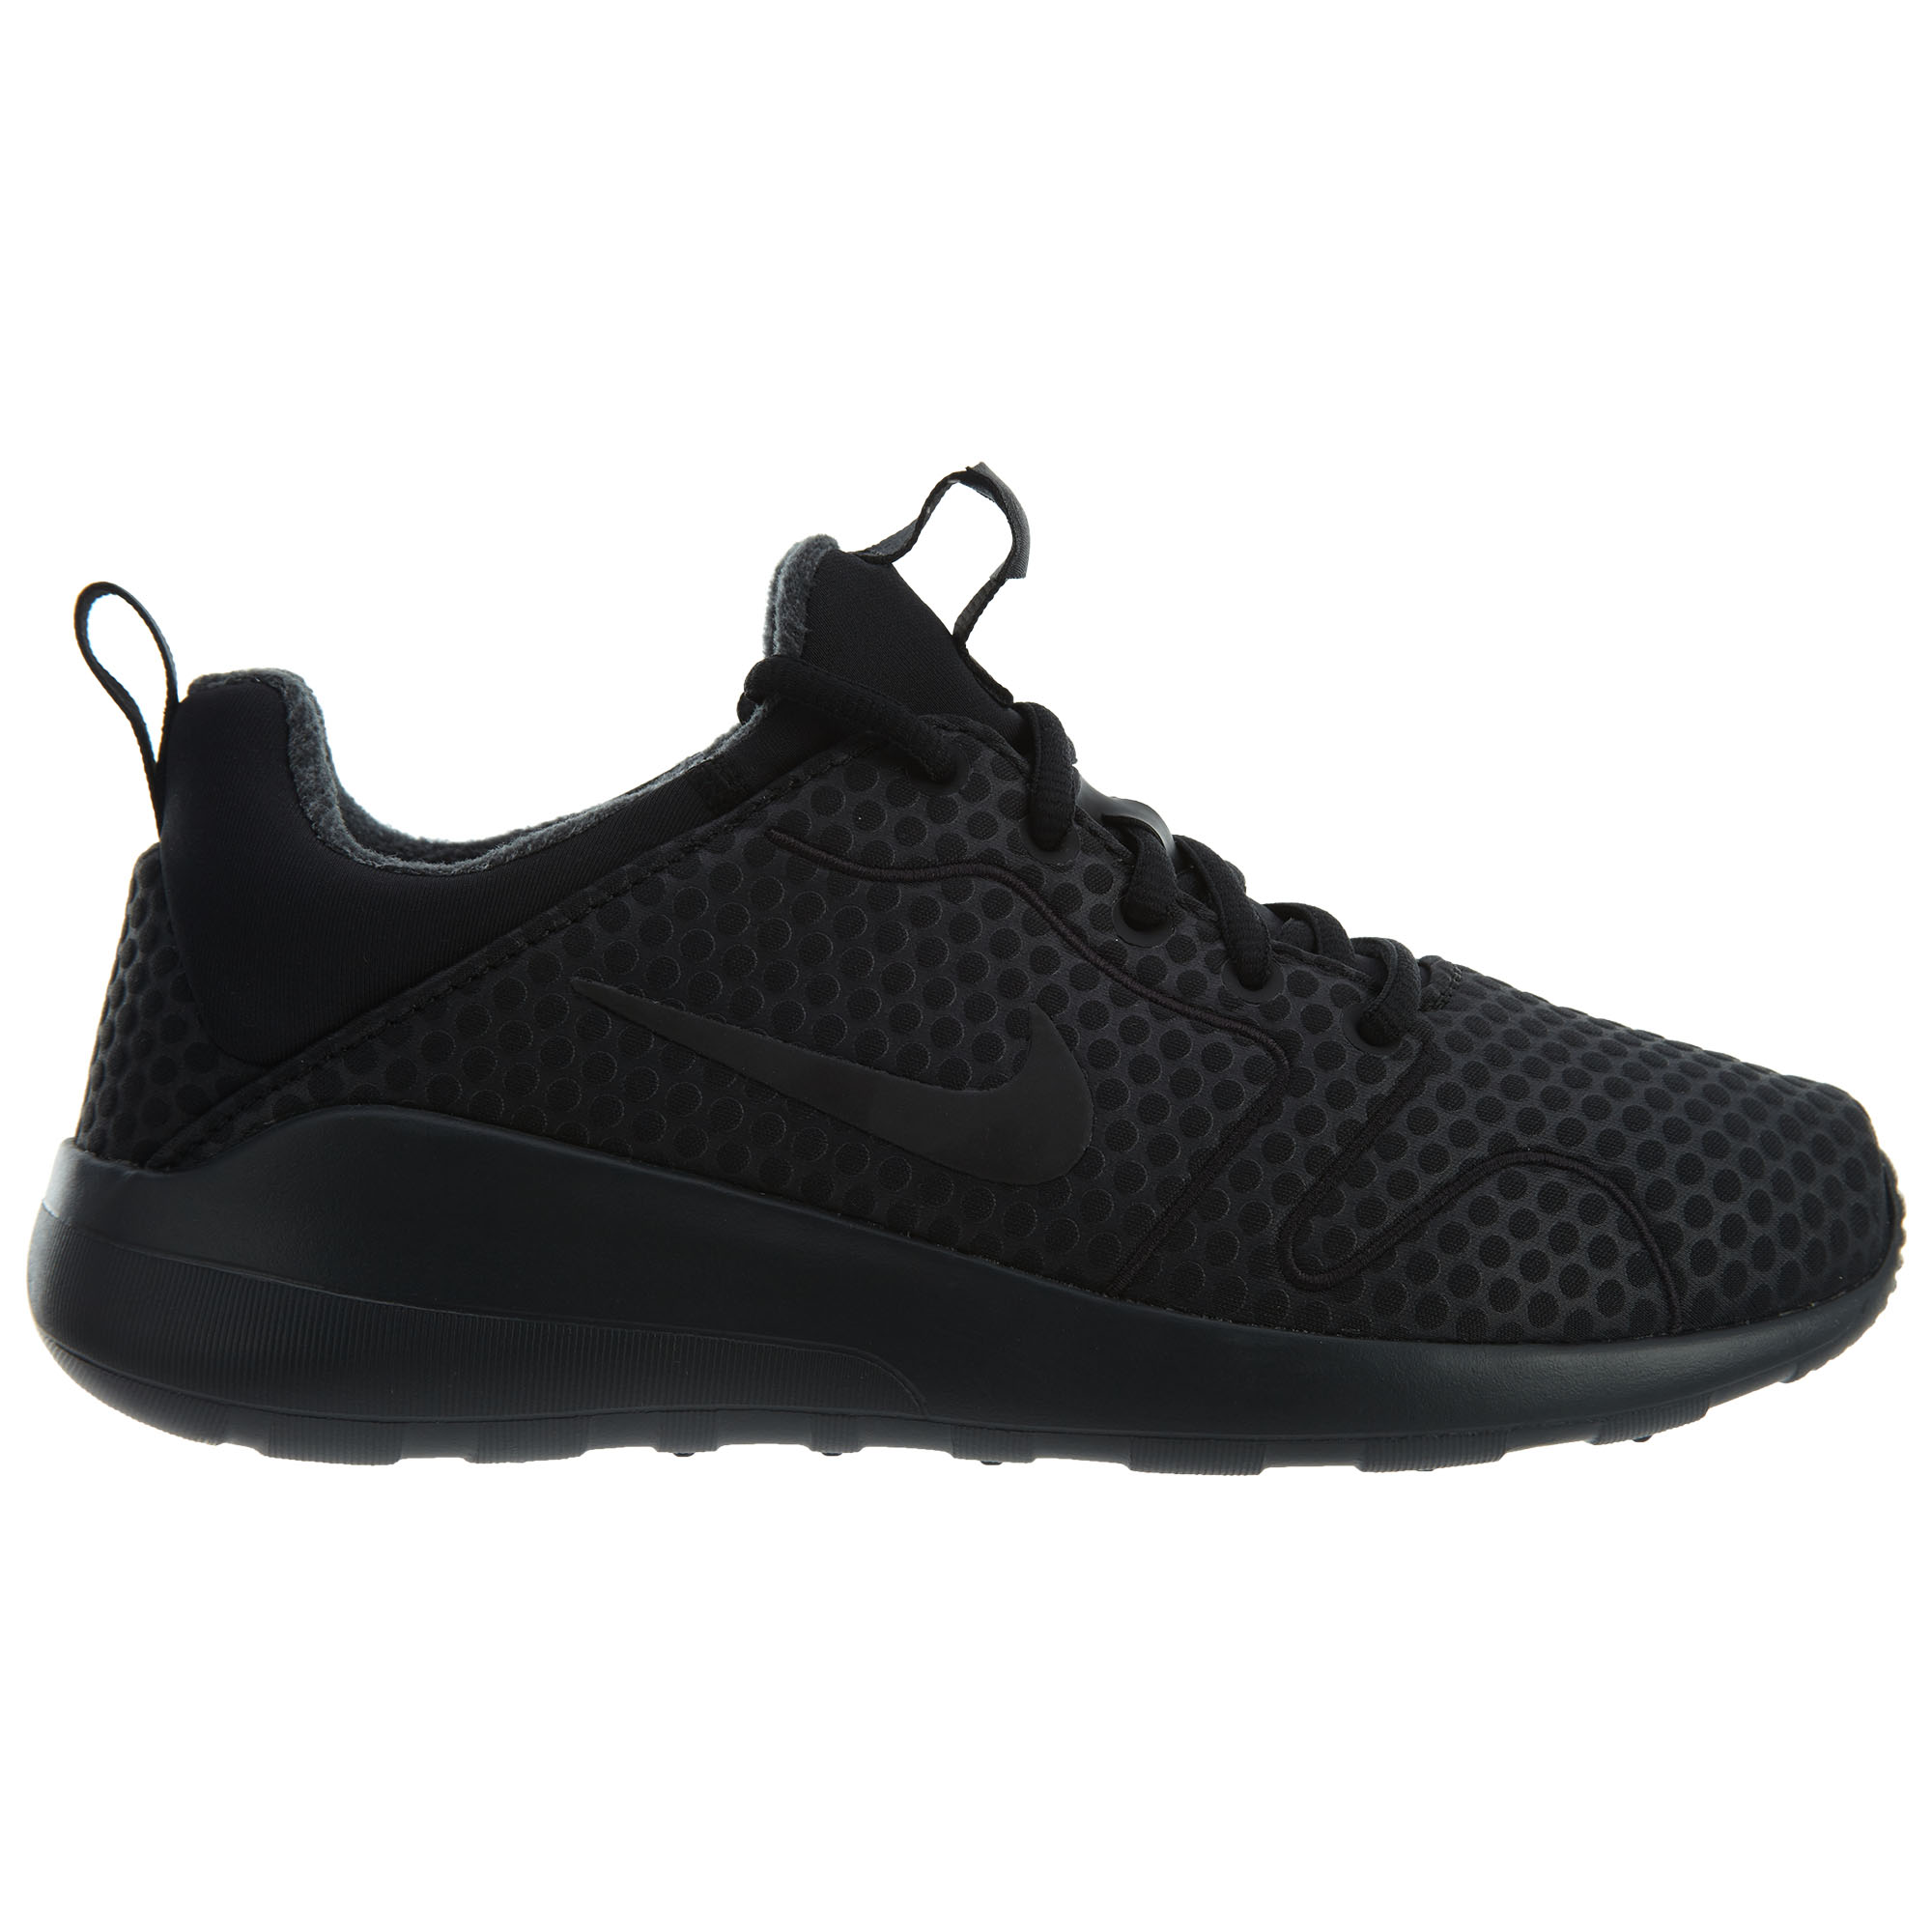 Nike Kaishi 2.0 Se Black Black-Anthracite - 844838-009 - US